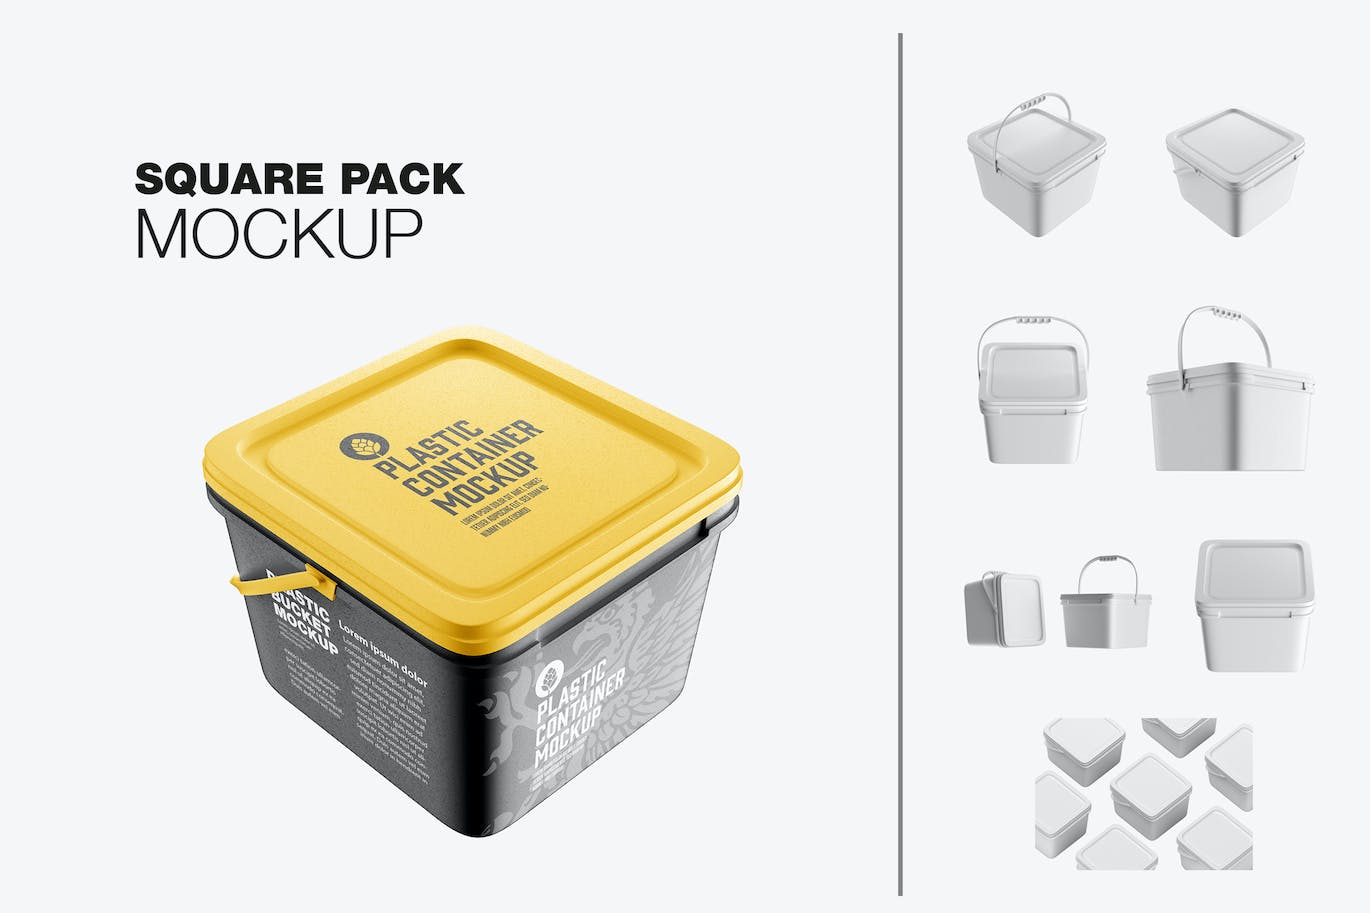 方形塑料容器包装设计样机 Square Plastic Container Mockup 样机素材 第1张